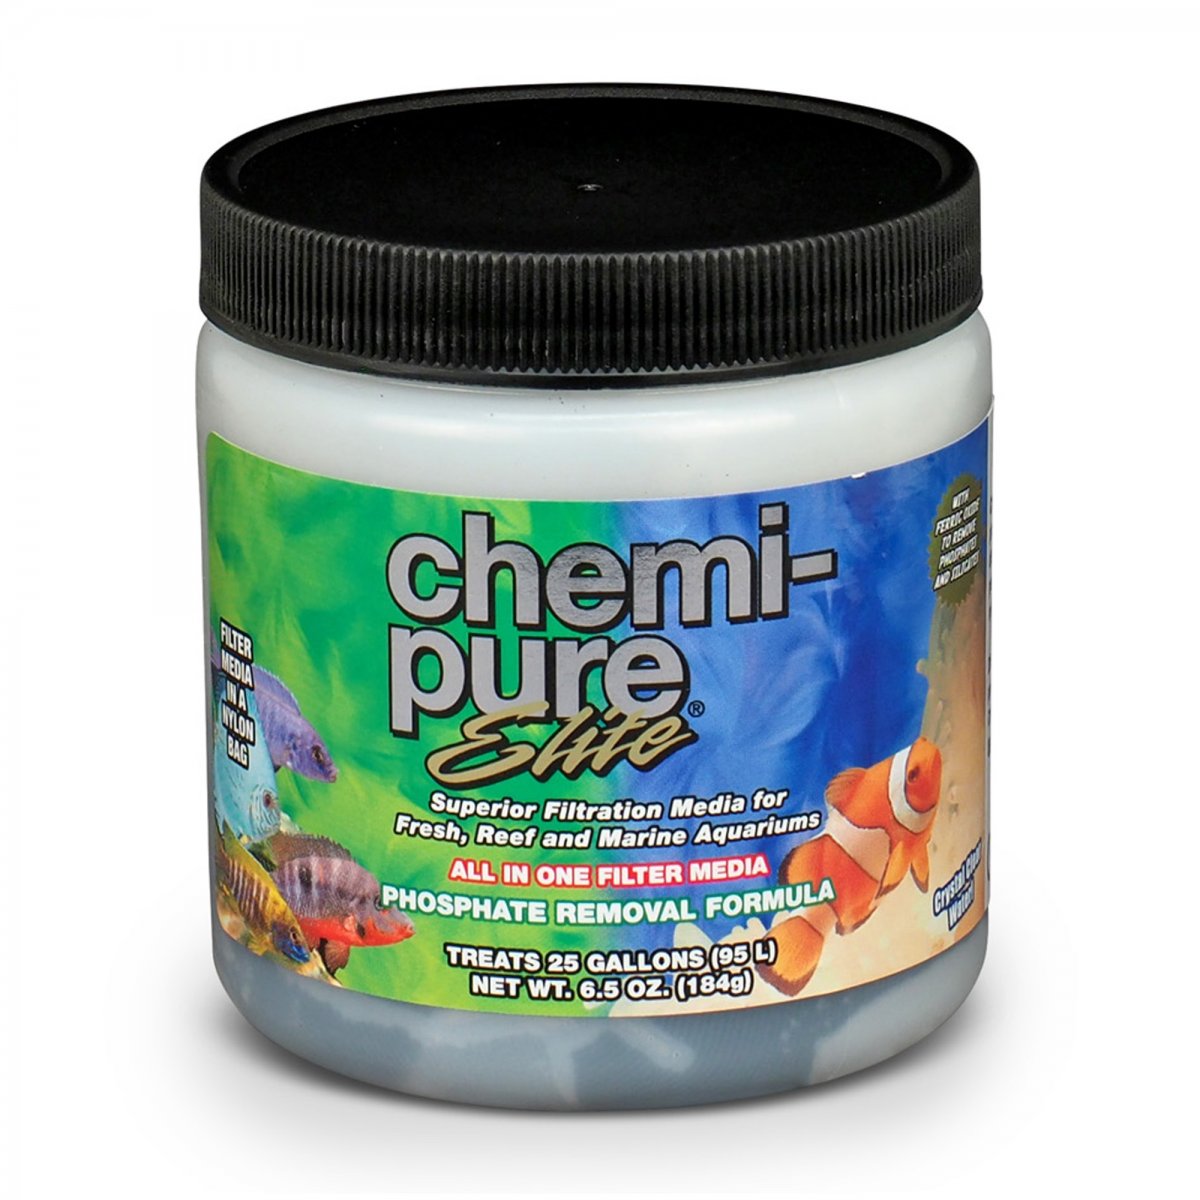 Chemi-pure Elite 6.5 oz.jpg